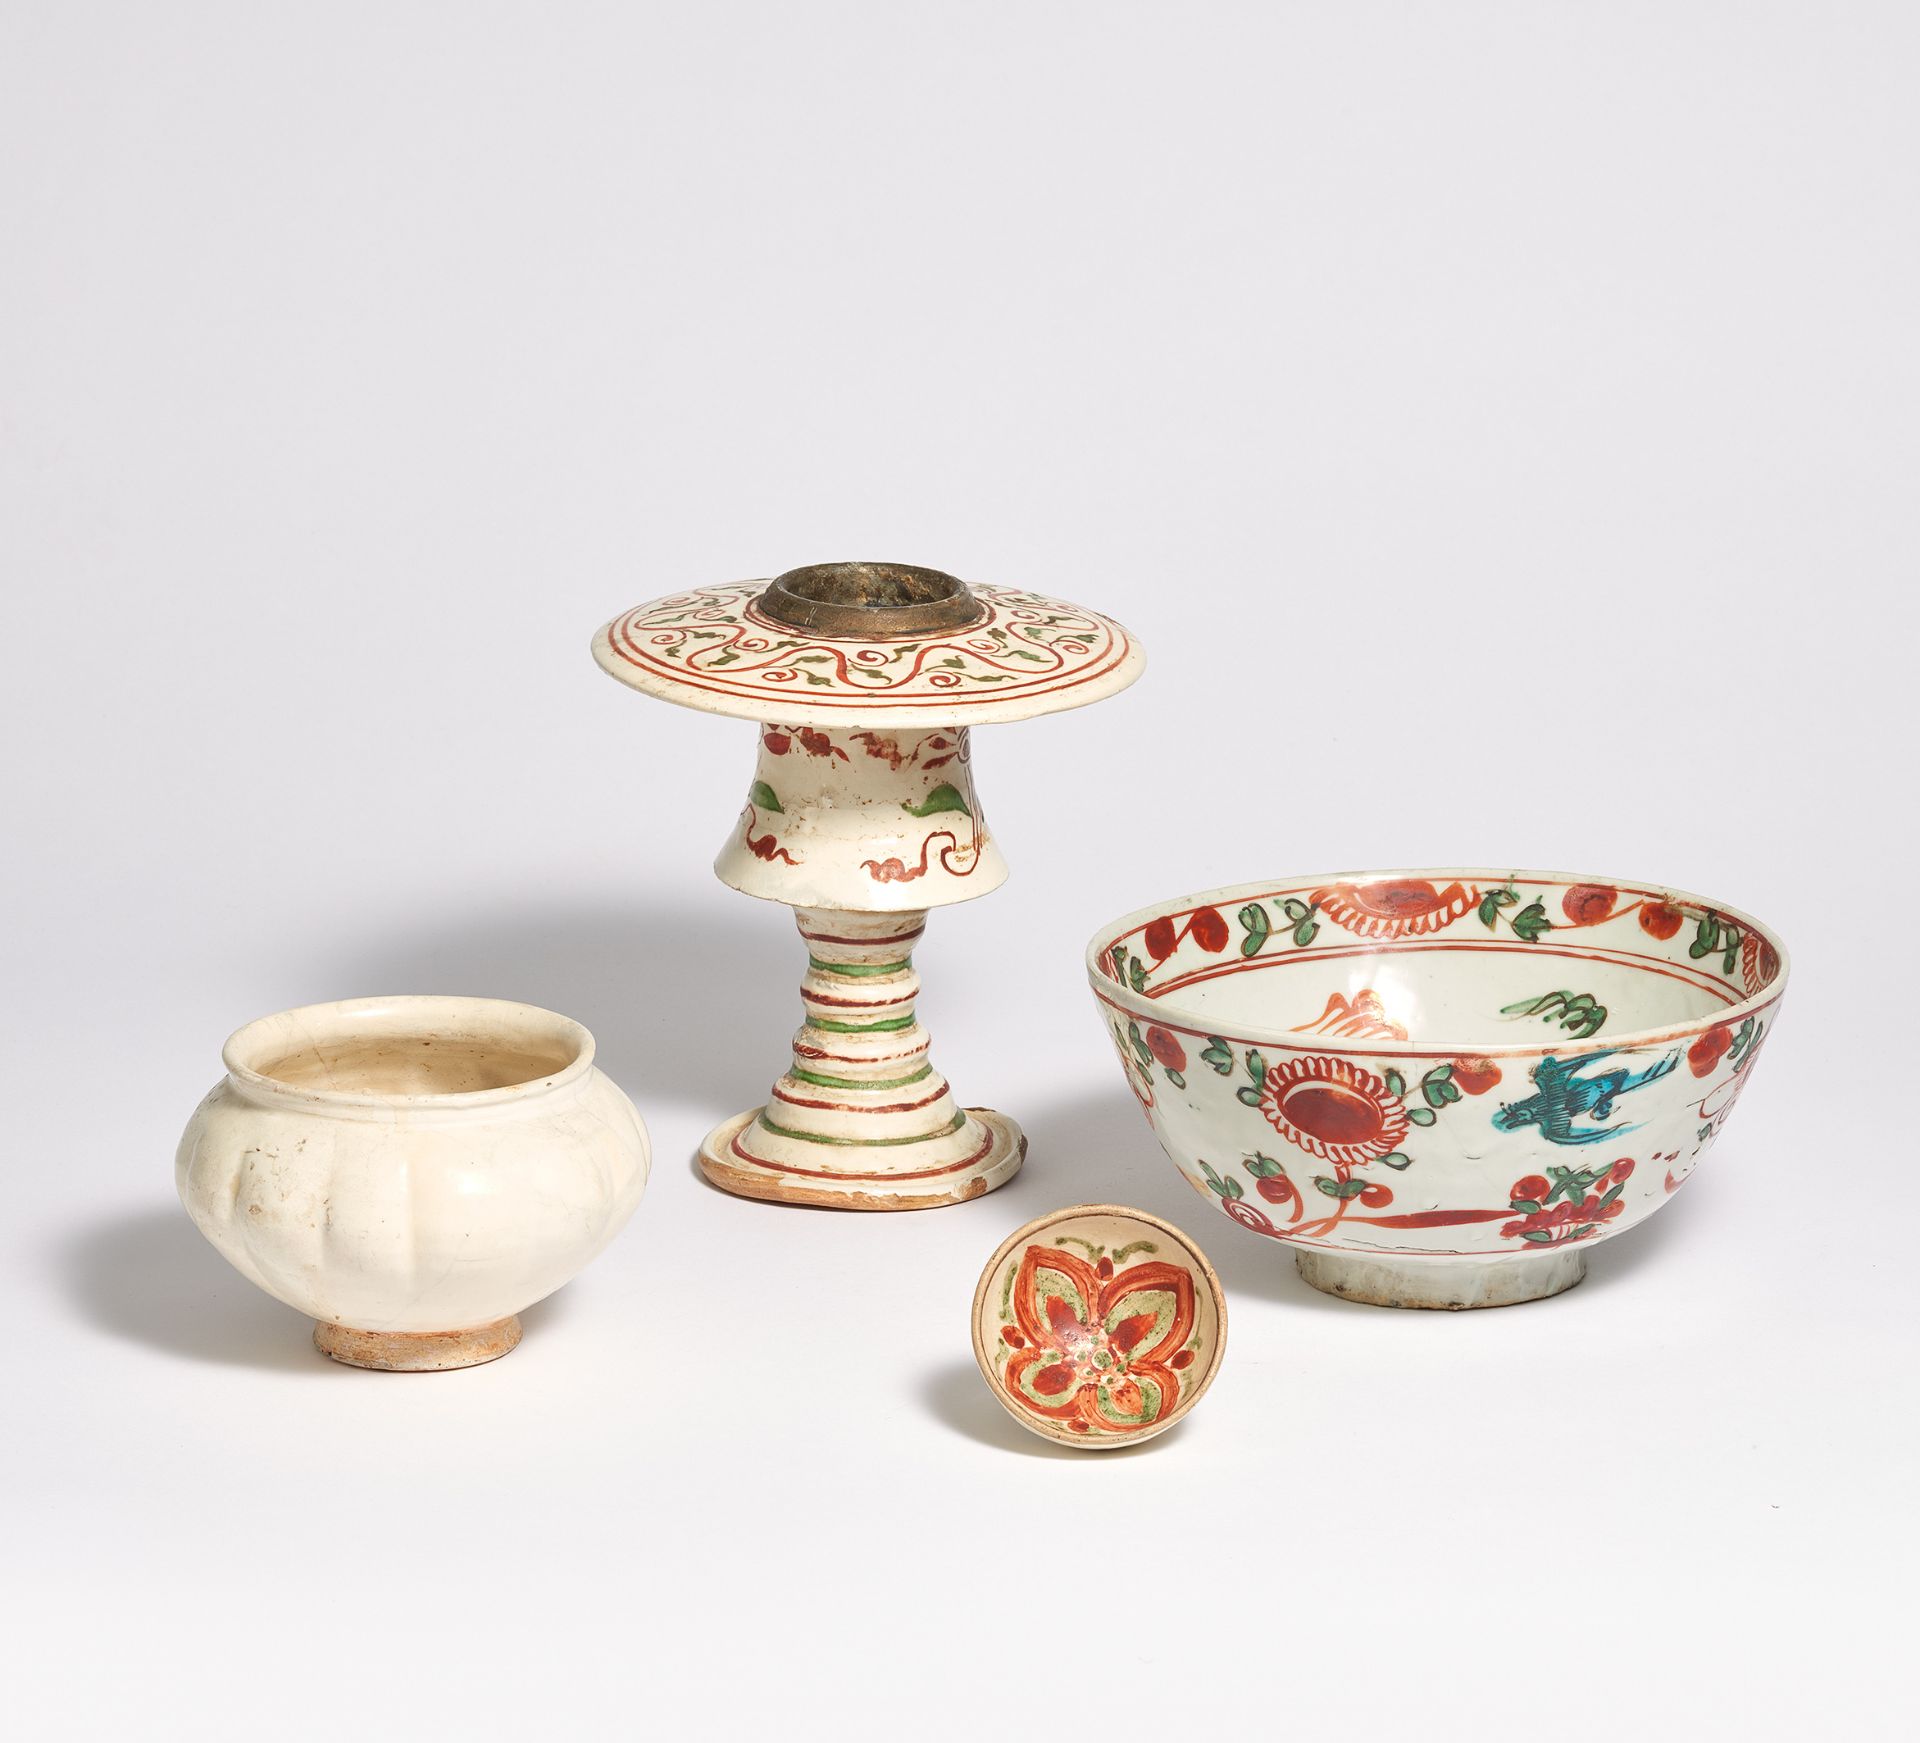 RARE INCENSE BURNER, SMALL CUP AND MELON SHAPED BOWL. China. Song/Jin Dynasty. Cizhou kilns. Ferrous